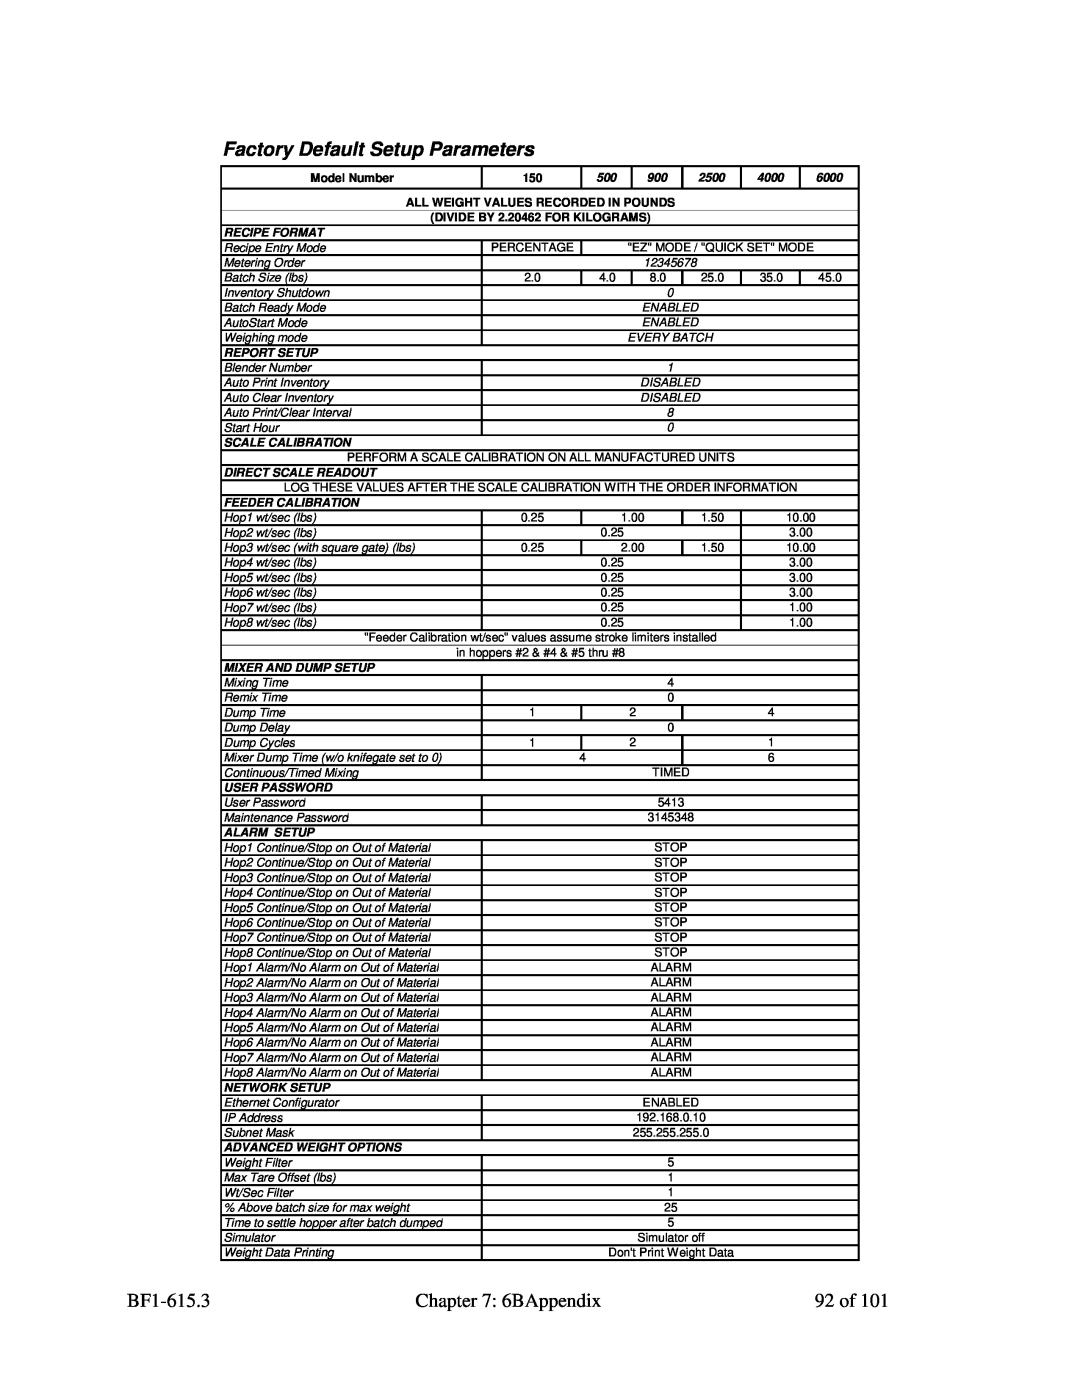 Mitsubishi Electronics 882.00273.00 specifications Factory Default Setup Parameters, BF1-615.3, 6BAppendix, 92 of 